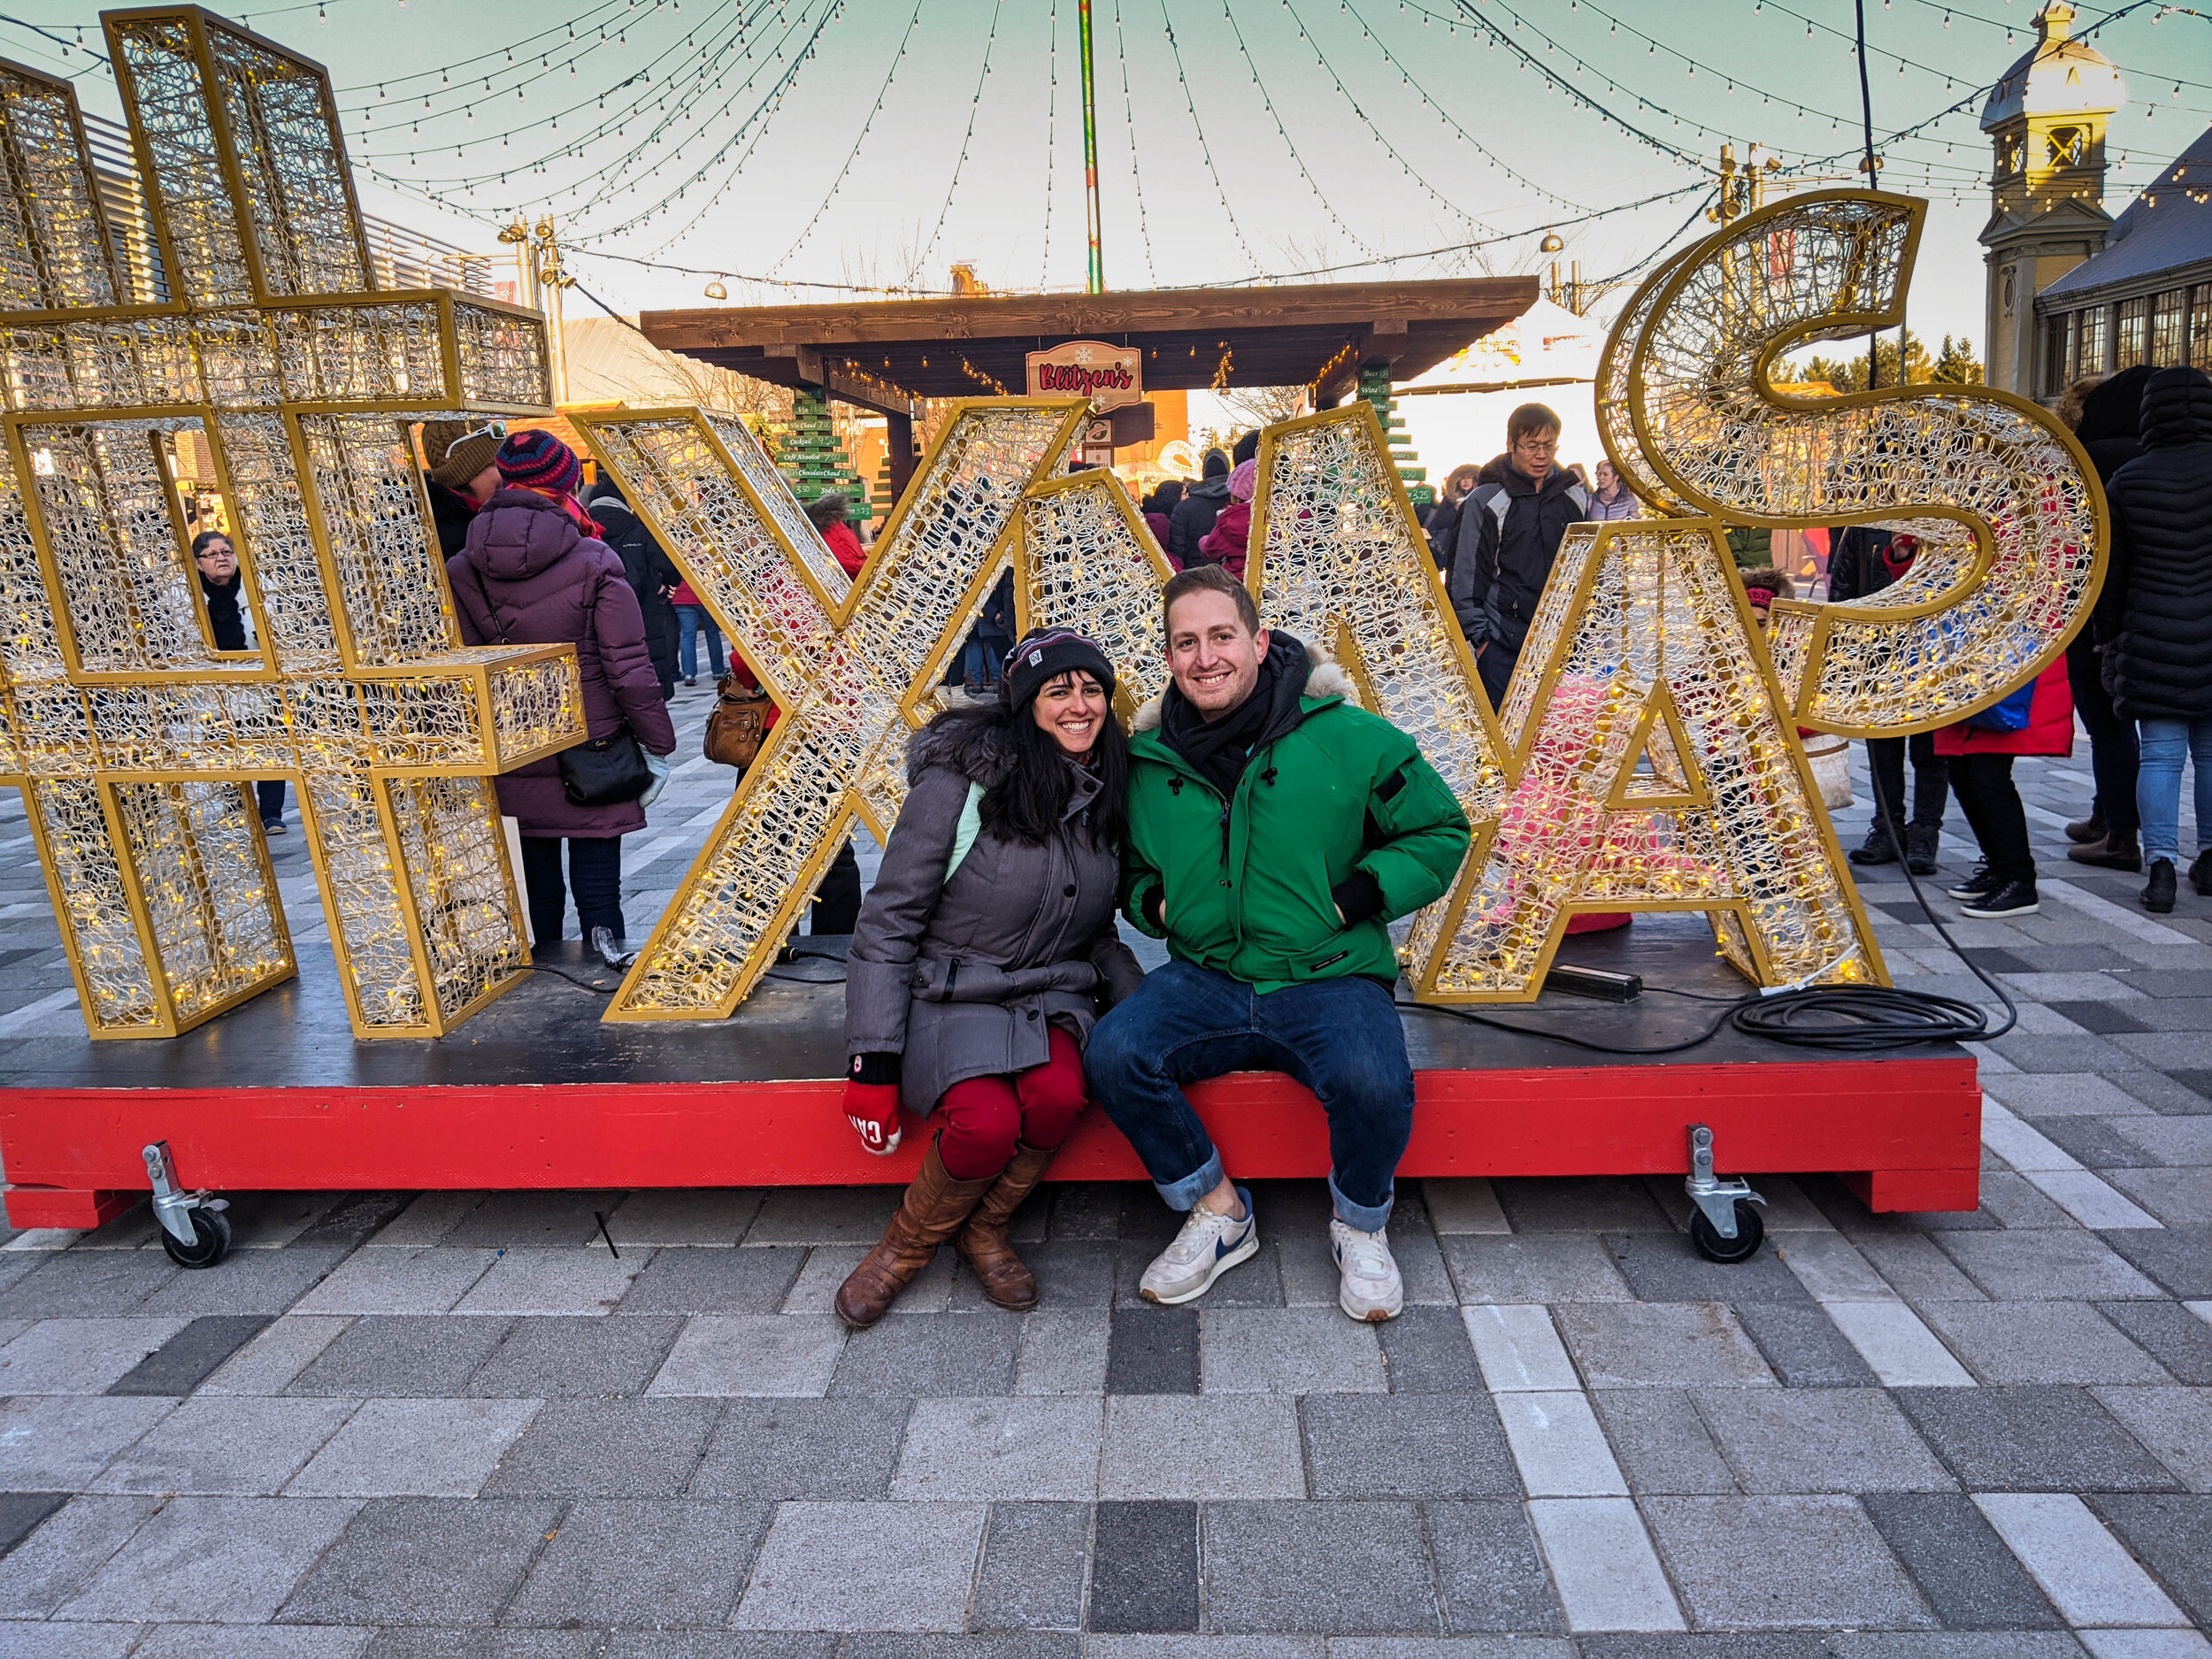 Couple at the Ottawa Christmas market sign